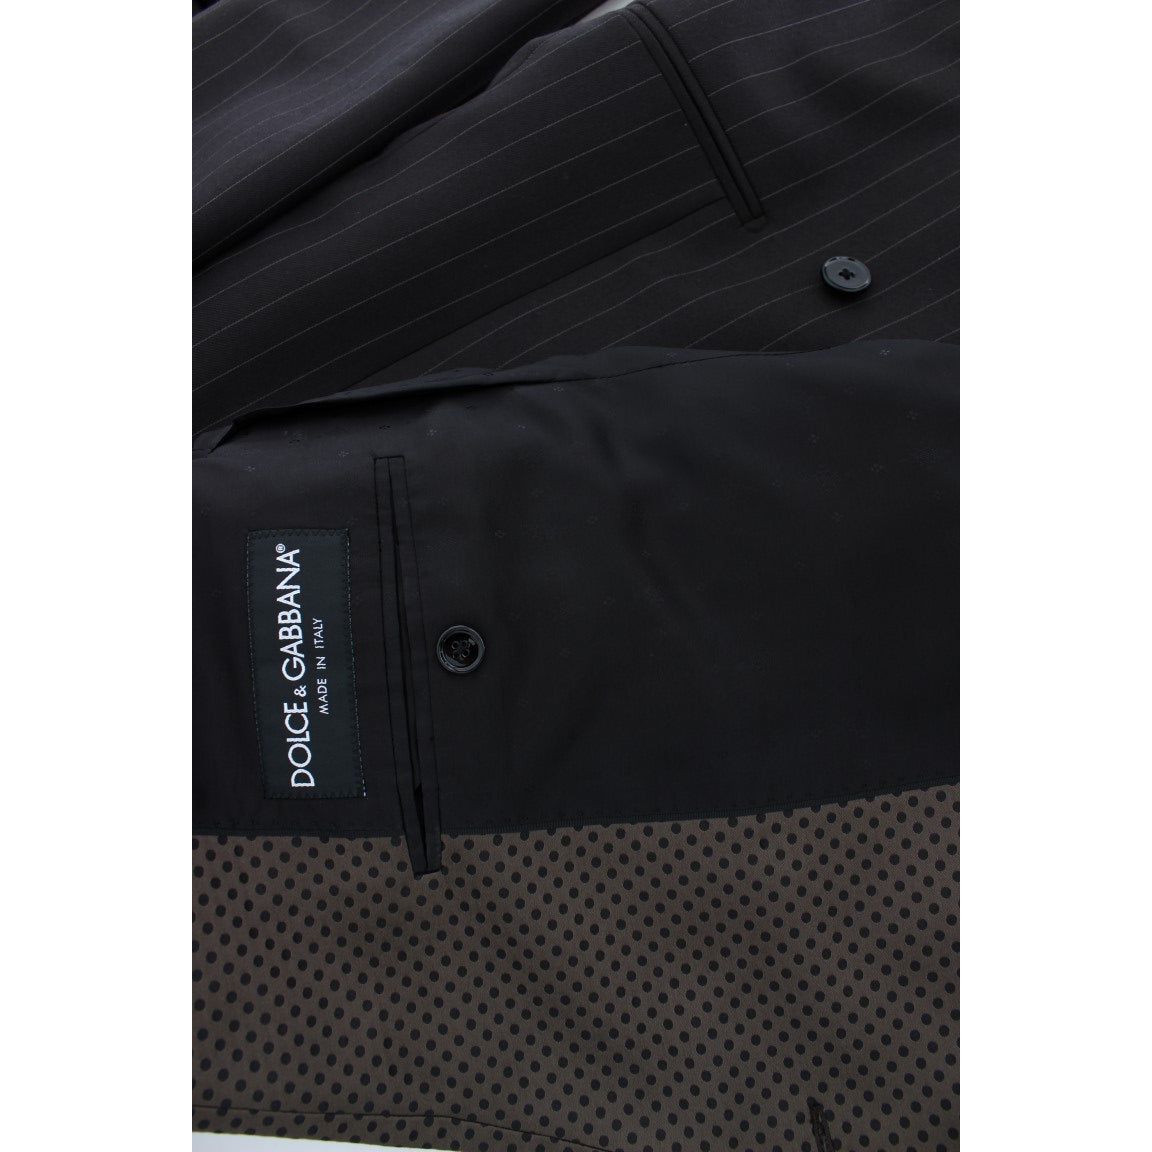 Dolce & Gabbana Elegant Brown Striped Three-Piece Tuxedo brown-striped-wool-slim-3-piece-suit-tuxedo Suit 45522-brown-striped-wool-slim-3-piece-suit-tuxedo-4.jpg